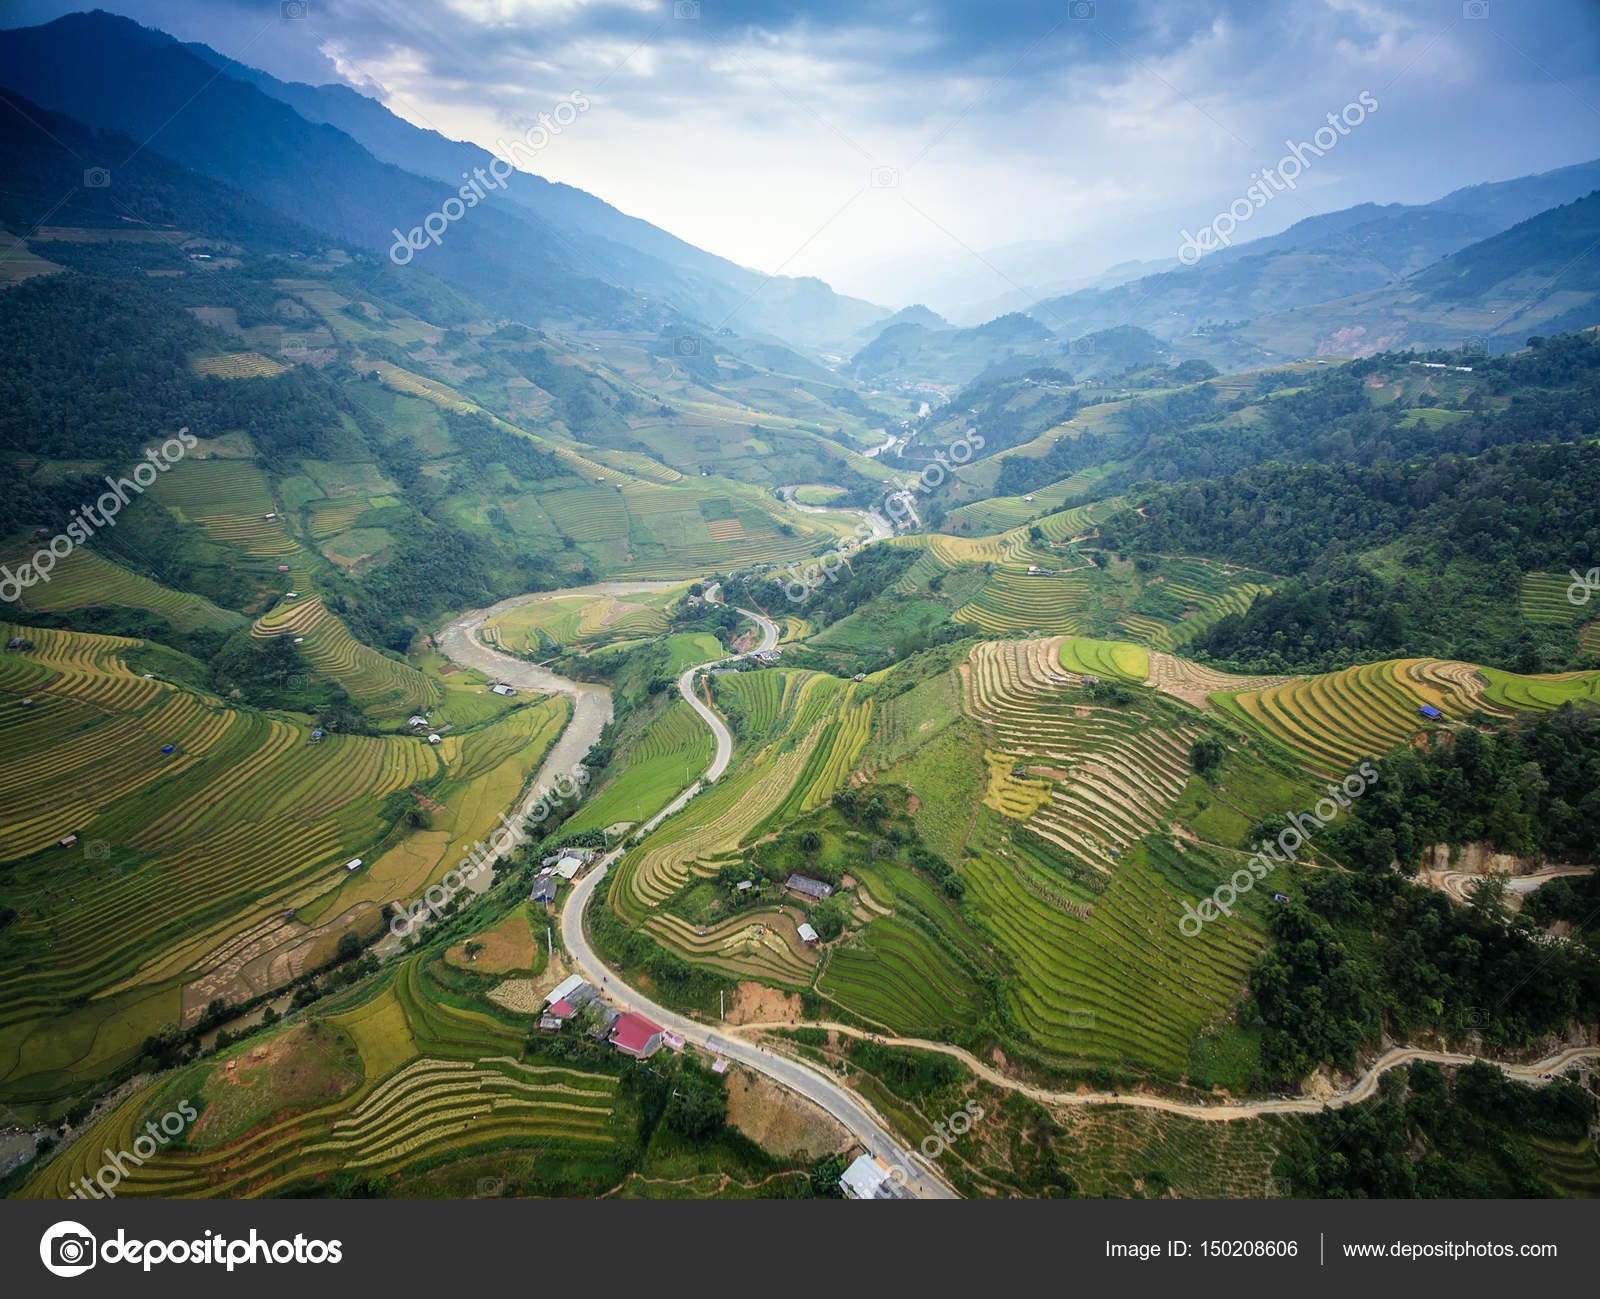 Mountain road in beautiful valley — Stock Photo © tipchai #150208606